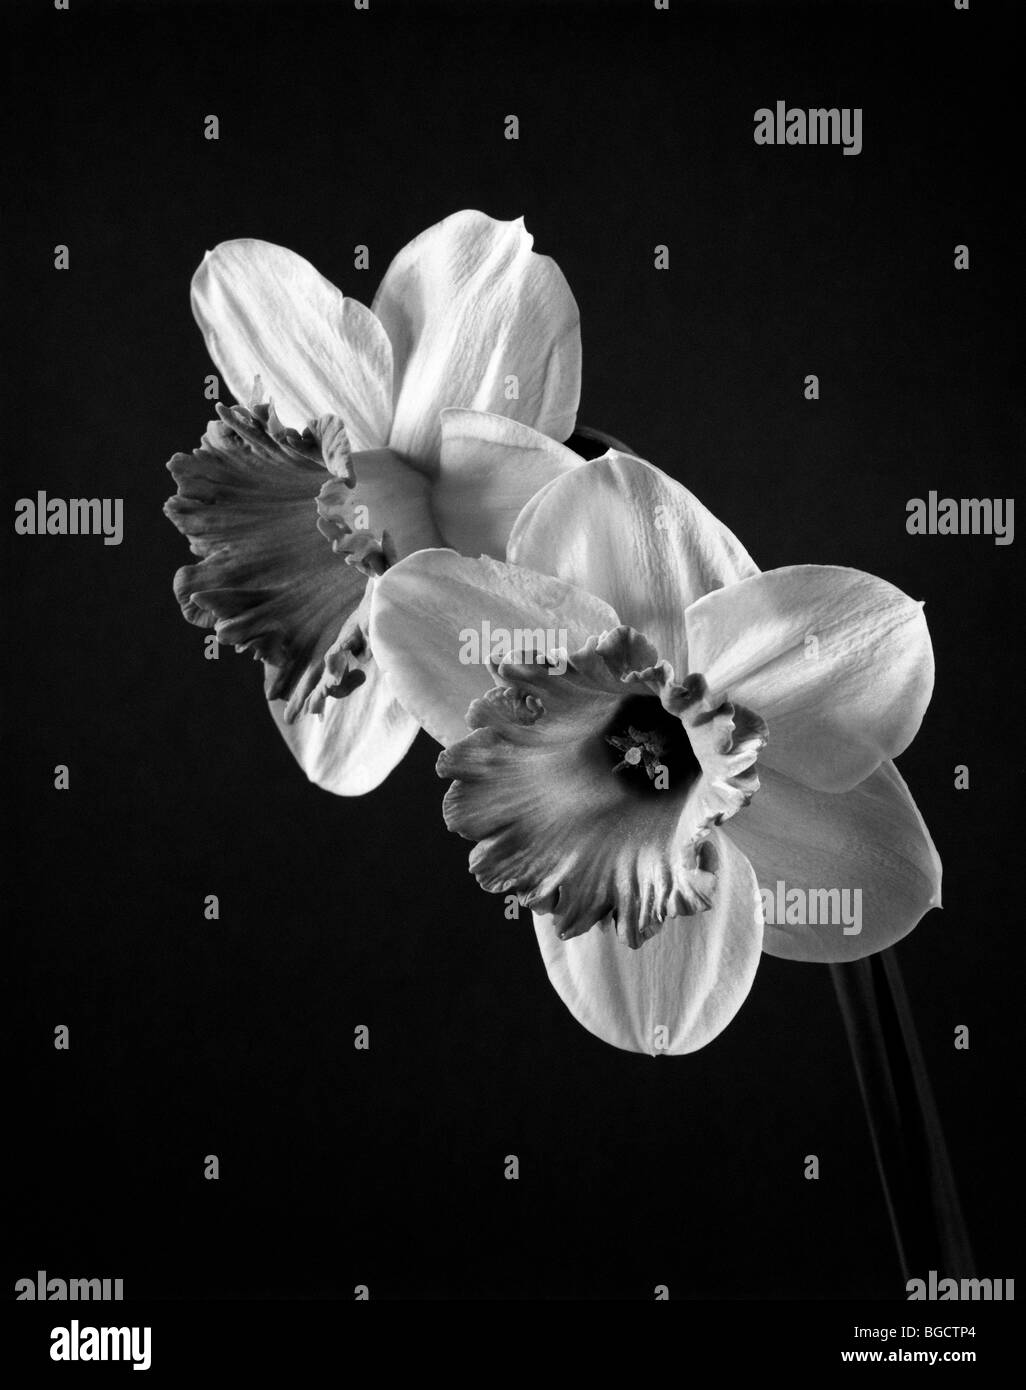 WASHINGTON - Daffodil flower in black and white. Stock Photo